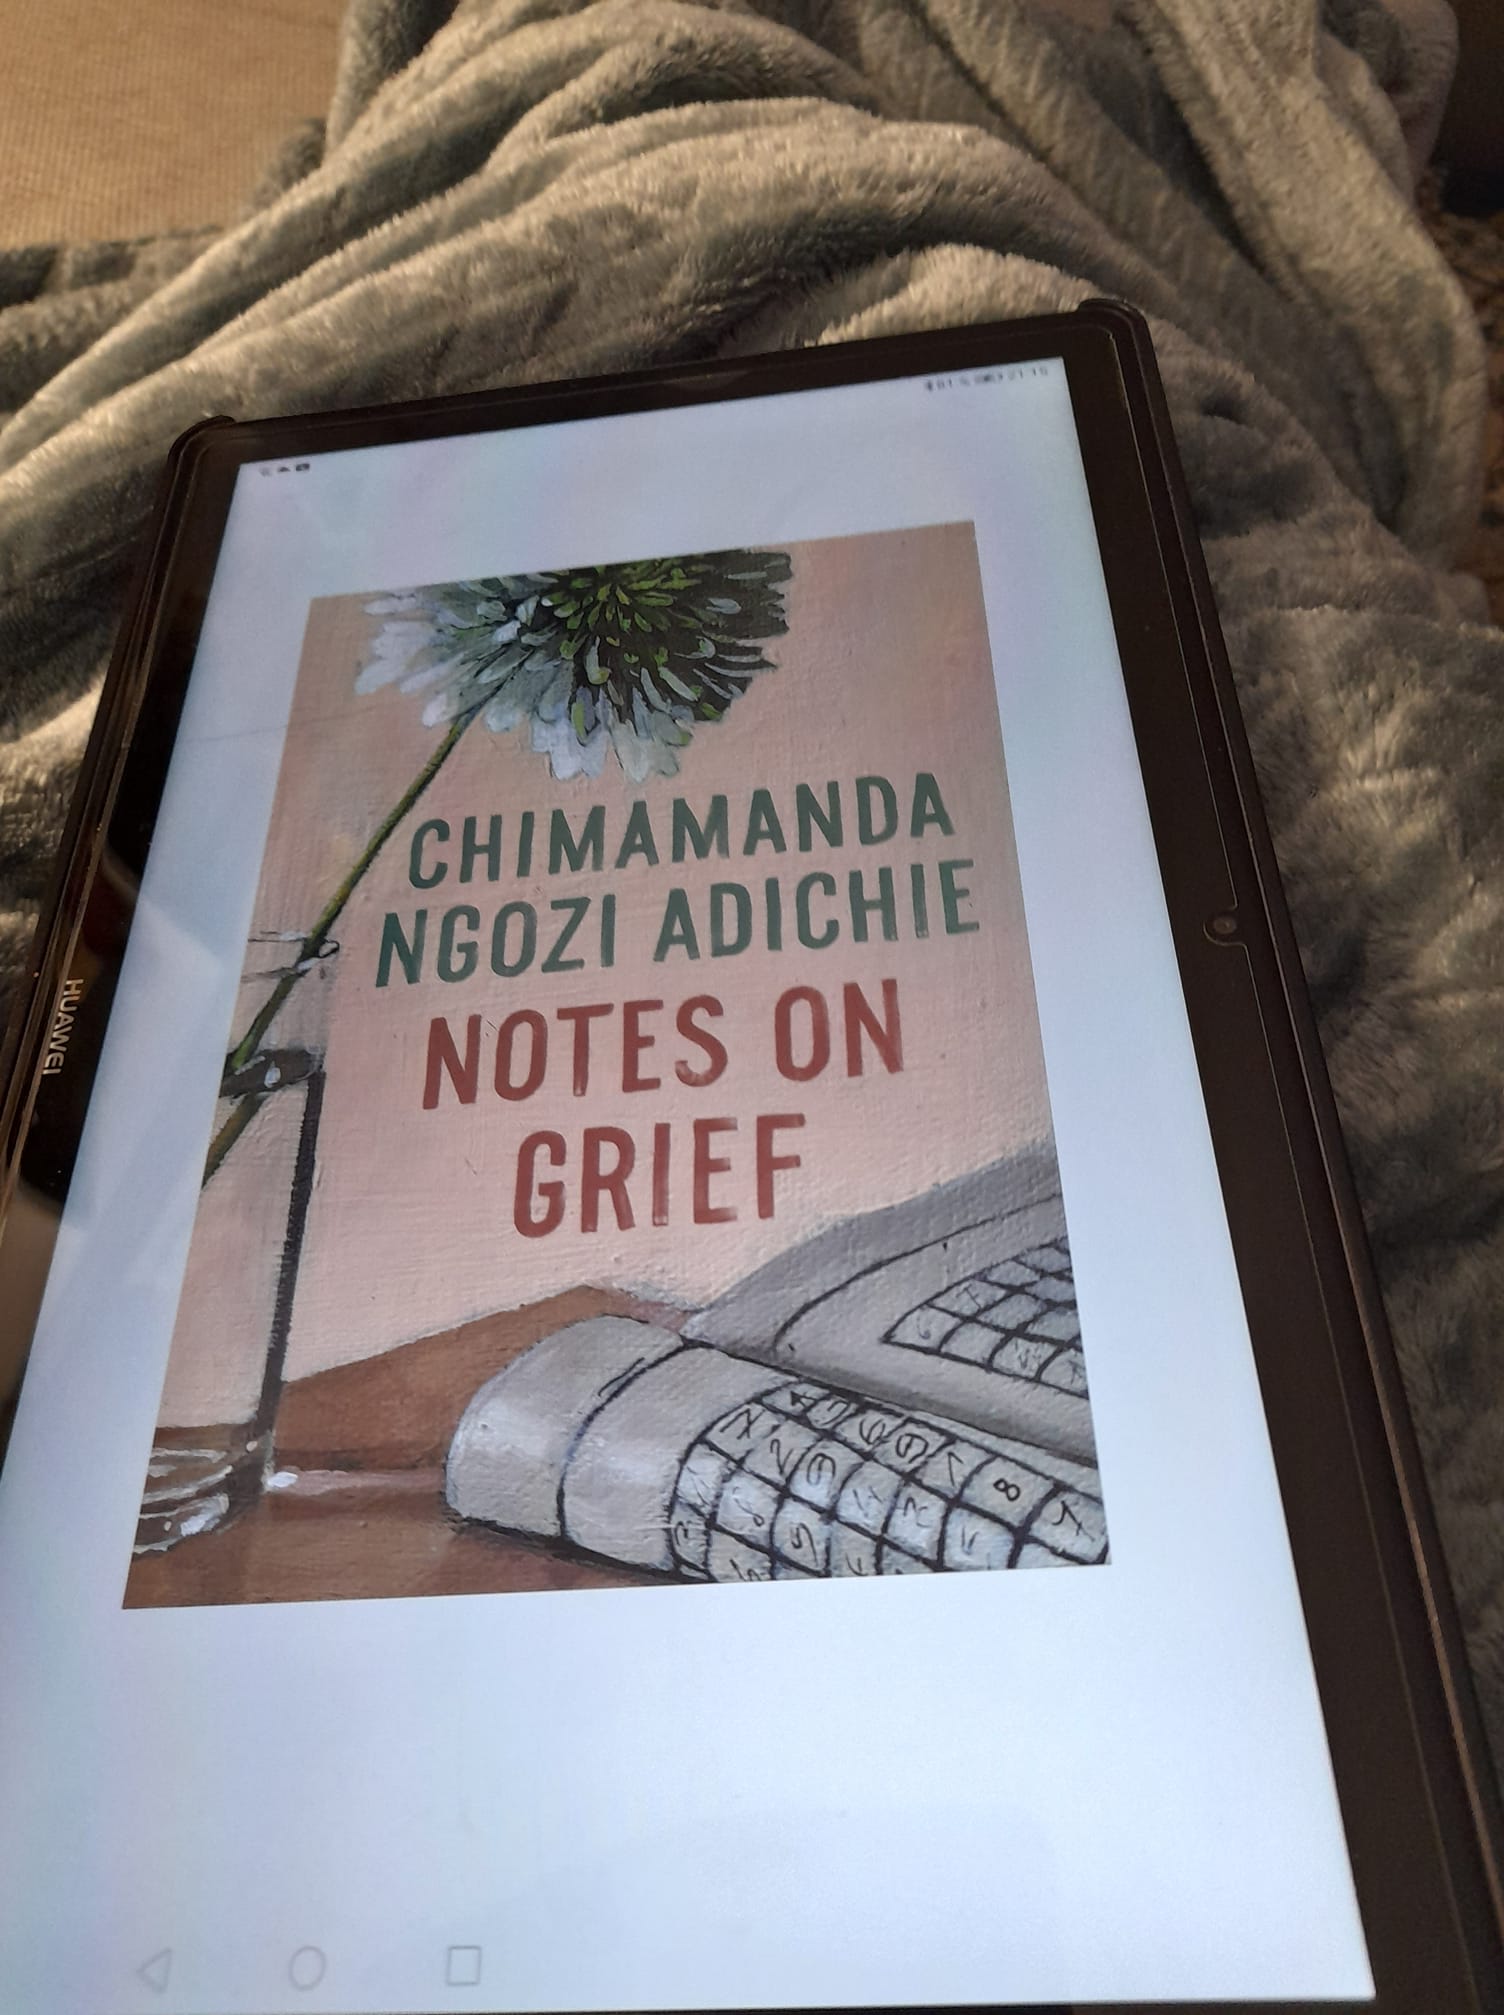 Notes on Grief by Chimamanda Ngozi Adichie